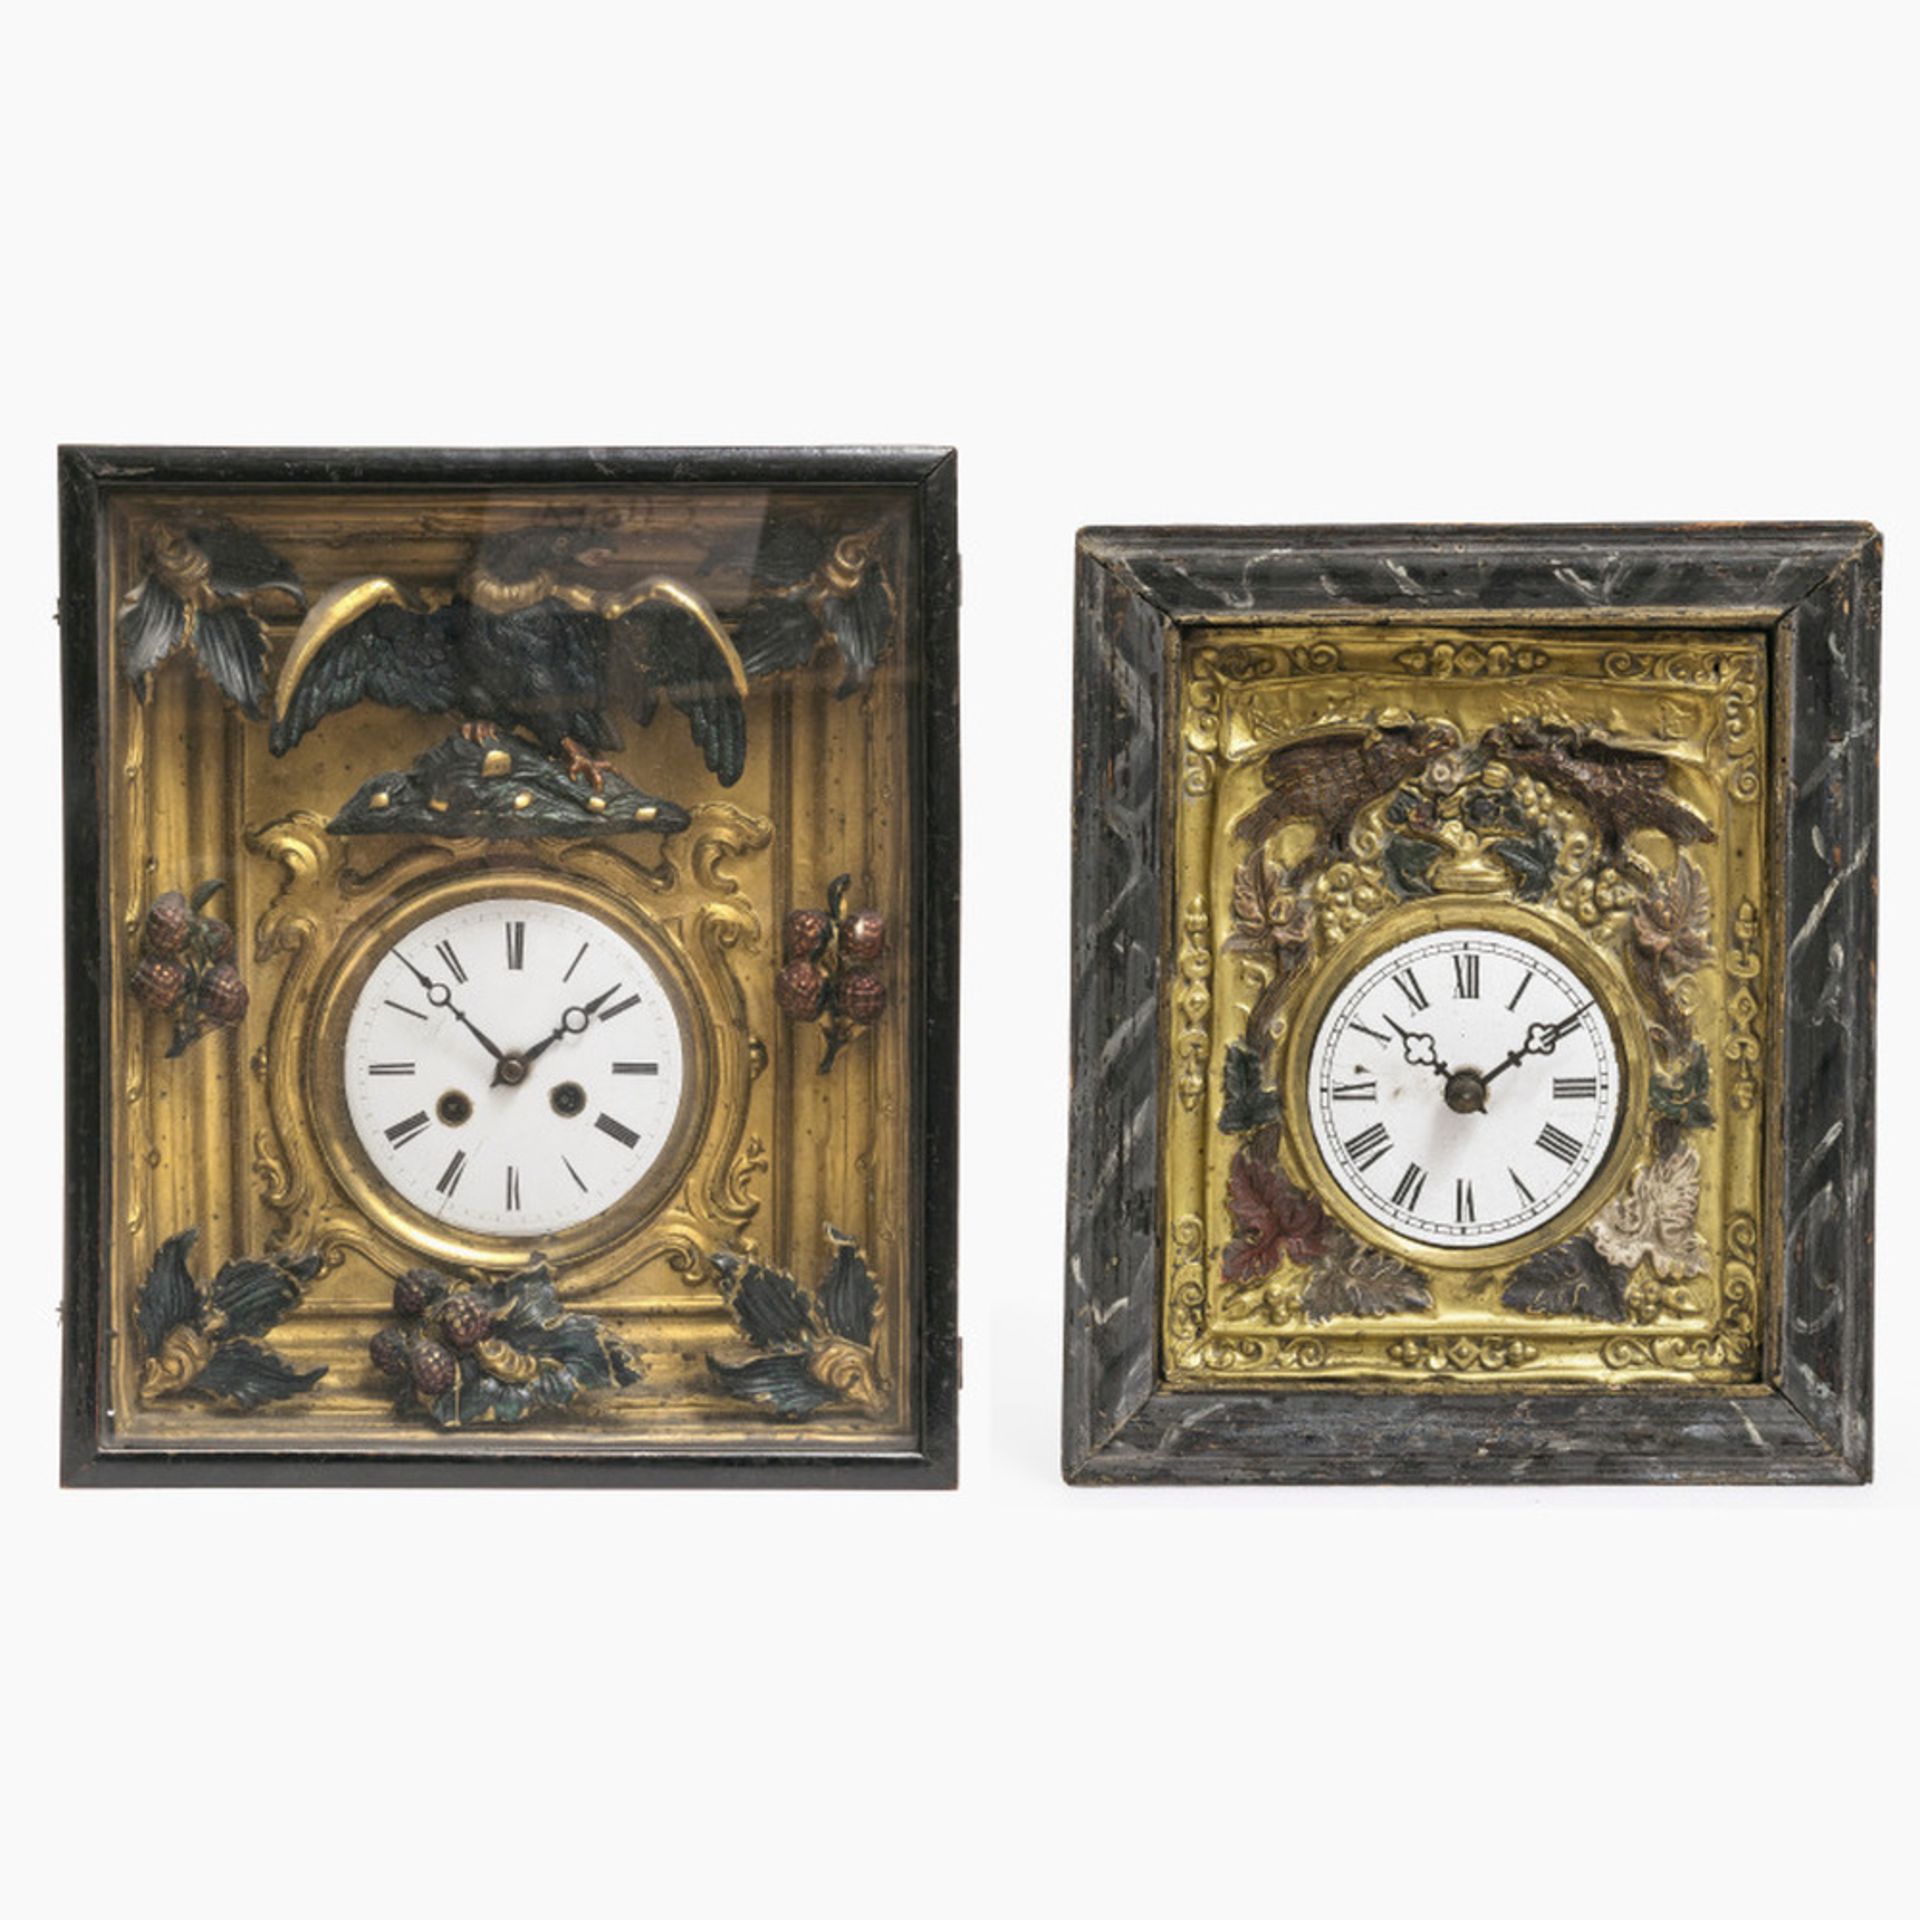 Two frame clocks